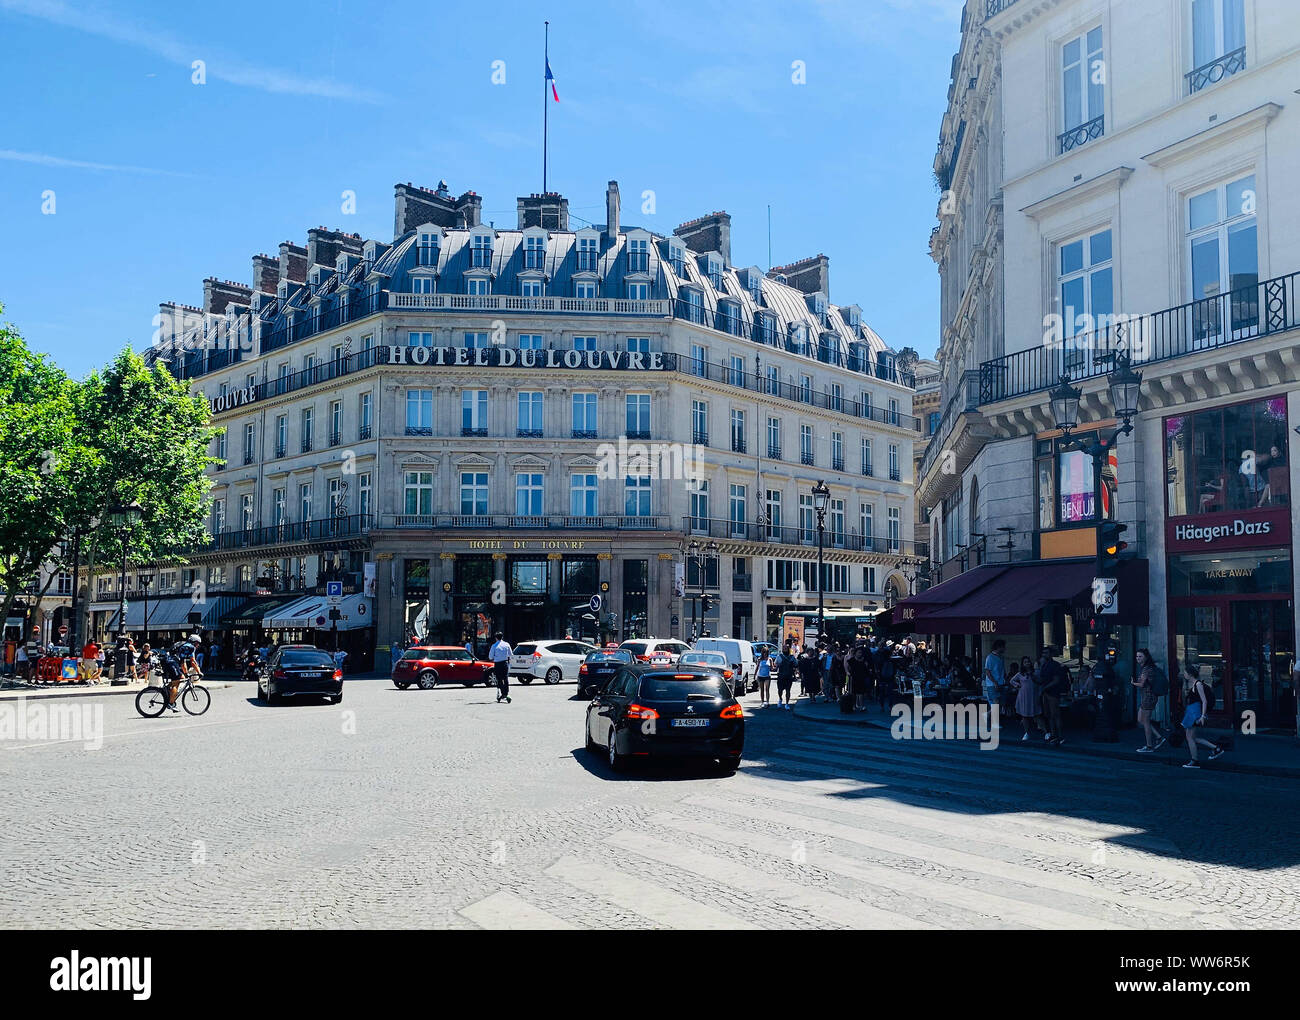 Paris / France - July 5, 2019: Hotel du Louvre facade. Currently Hyatt hotel. Stock Photo